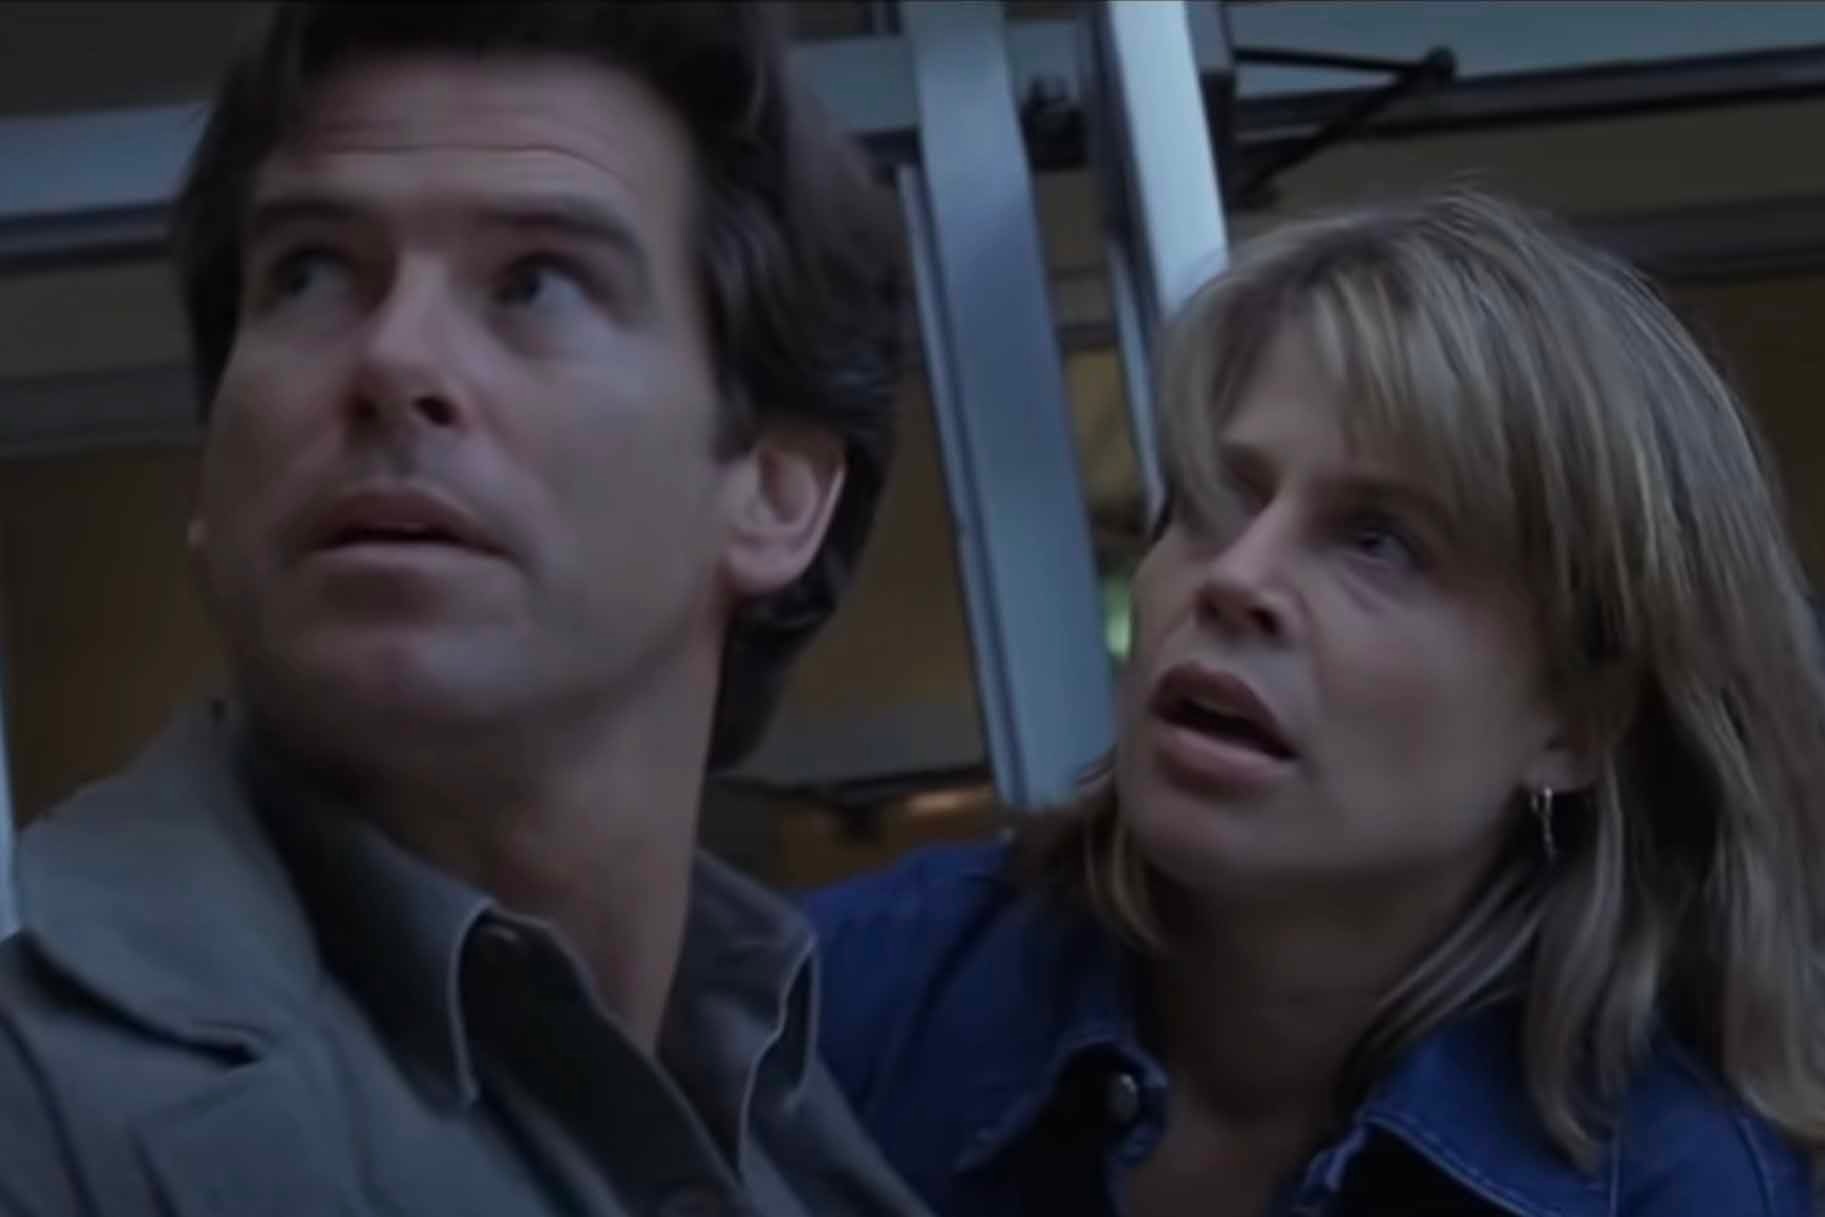 Harry Dalton (Pierce Brosnan) and Rachel Wando (Linda Hamilton) appear frightened in Dante's Peak (1997).